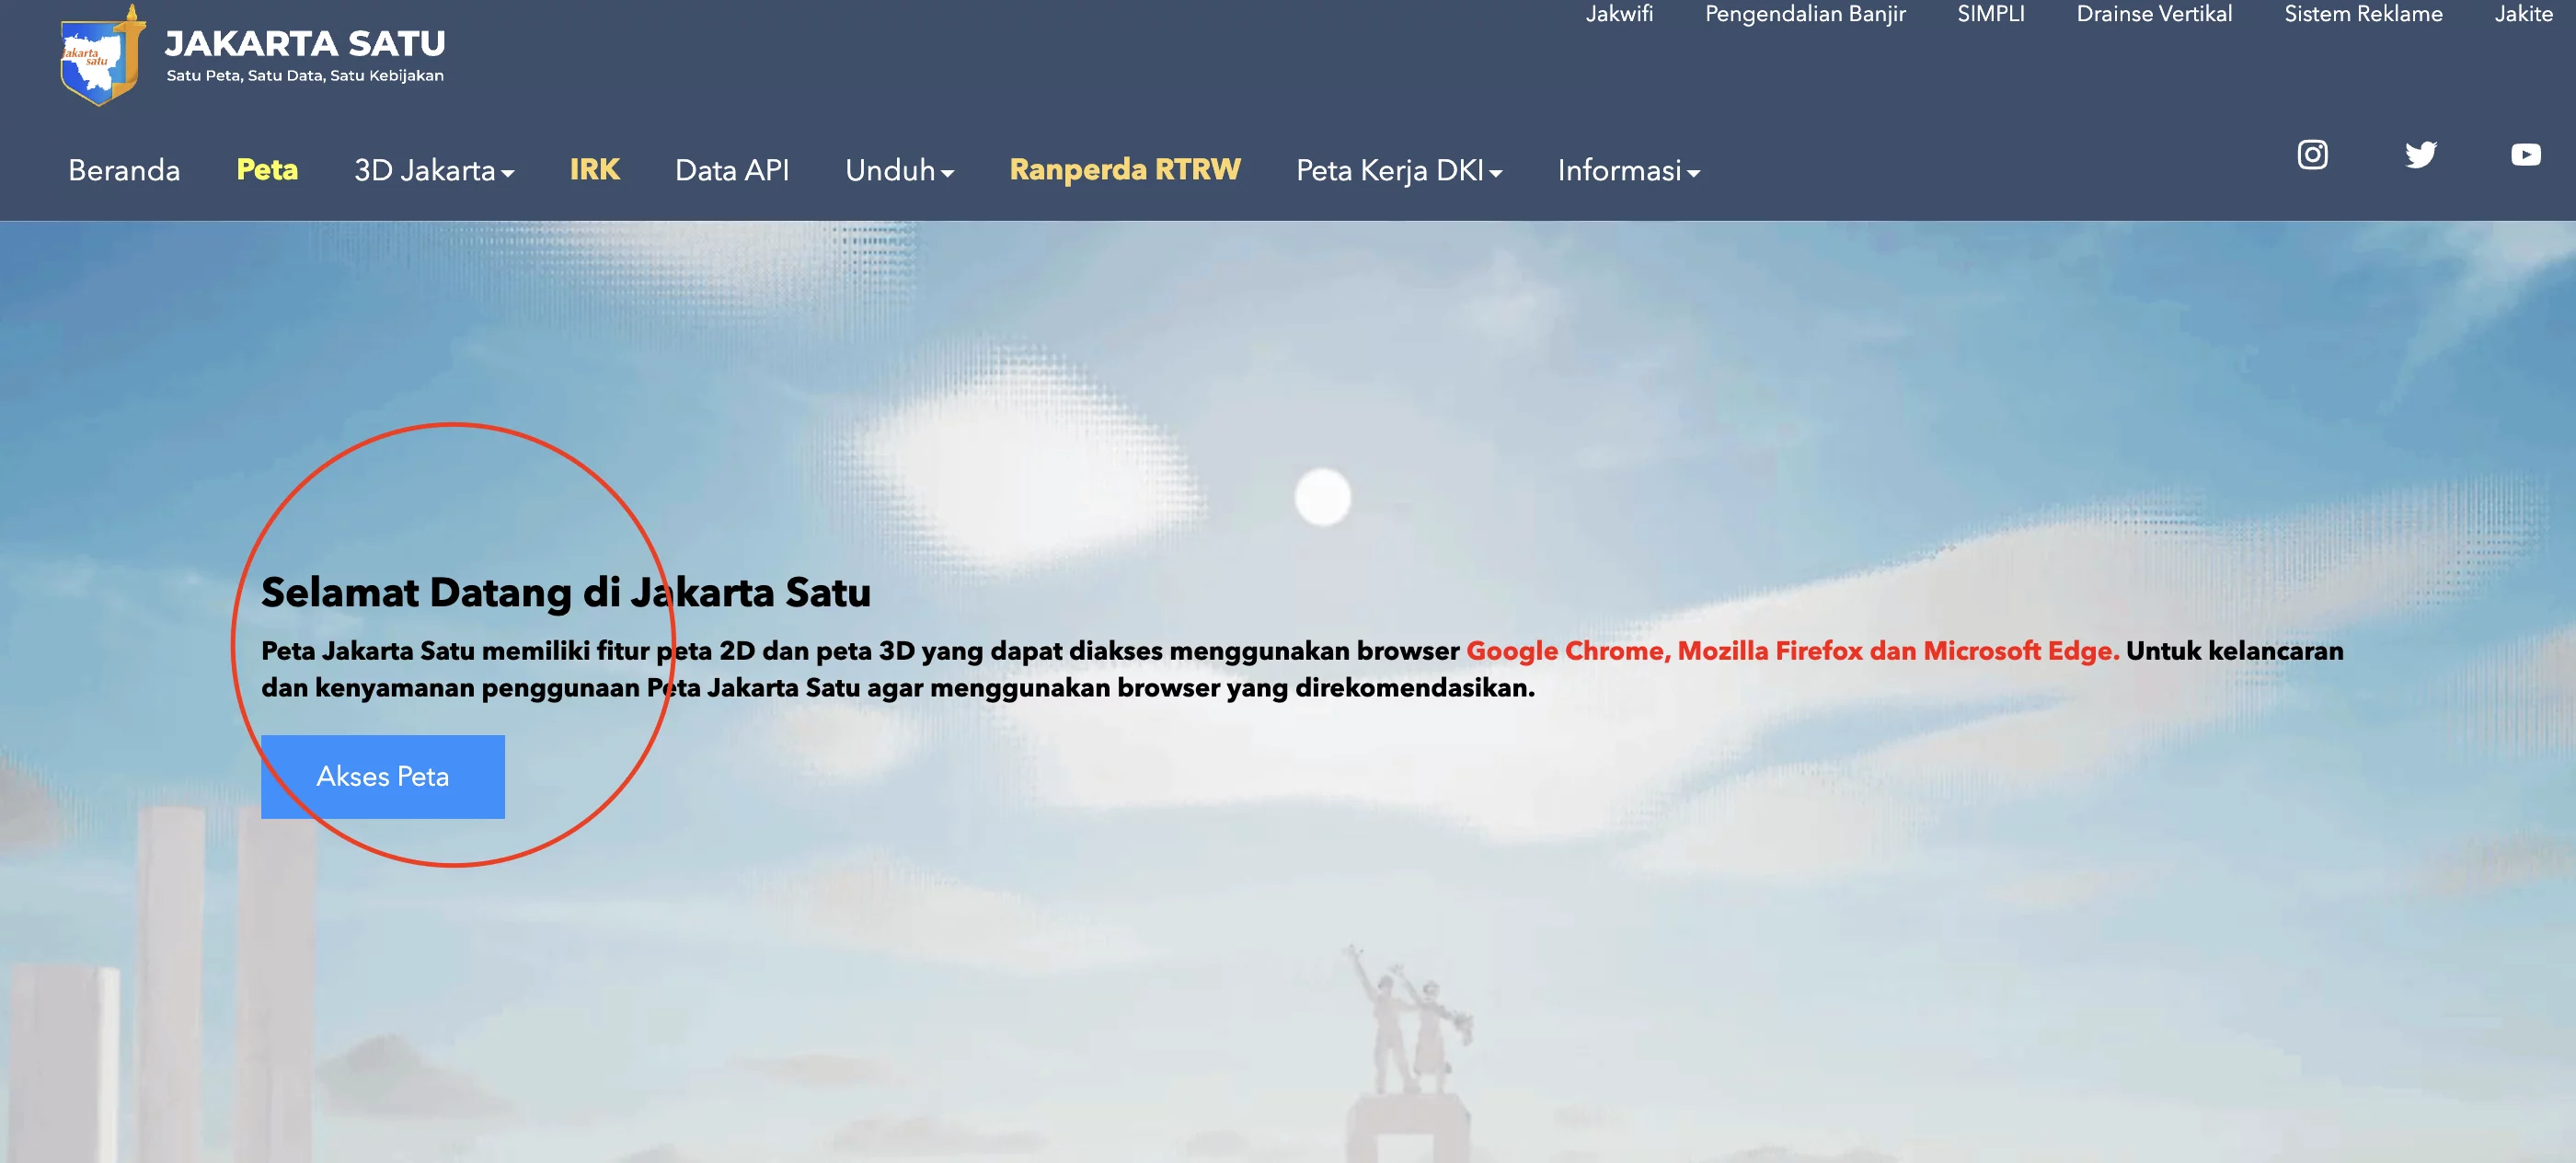 website jakarta satu Informasi Rencana Kota